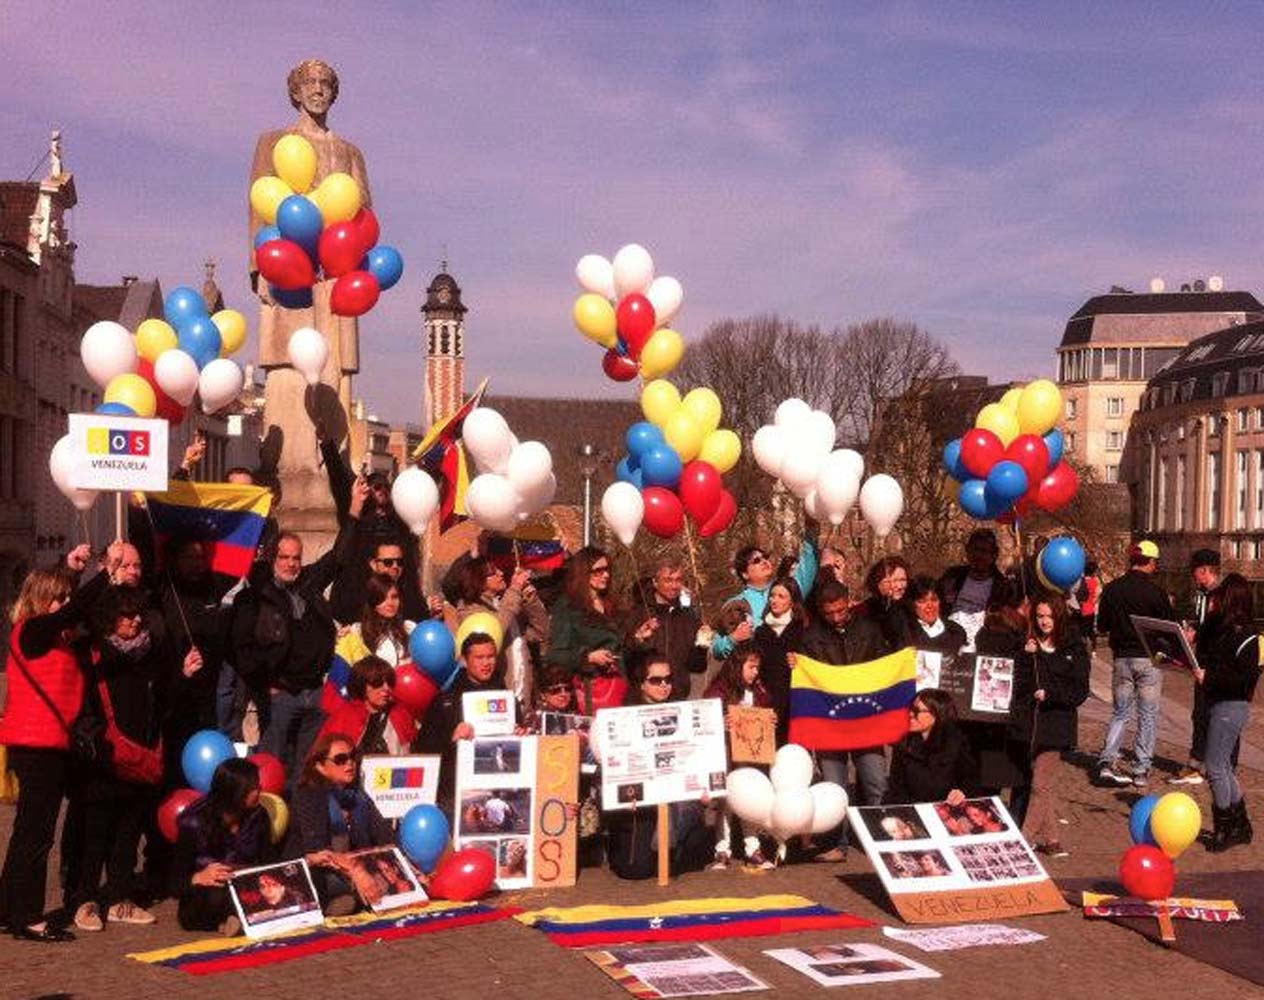 Venezolanos protestaron este 8M en Bruselas (Fotos)